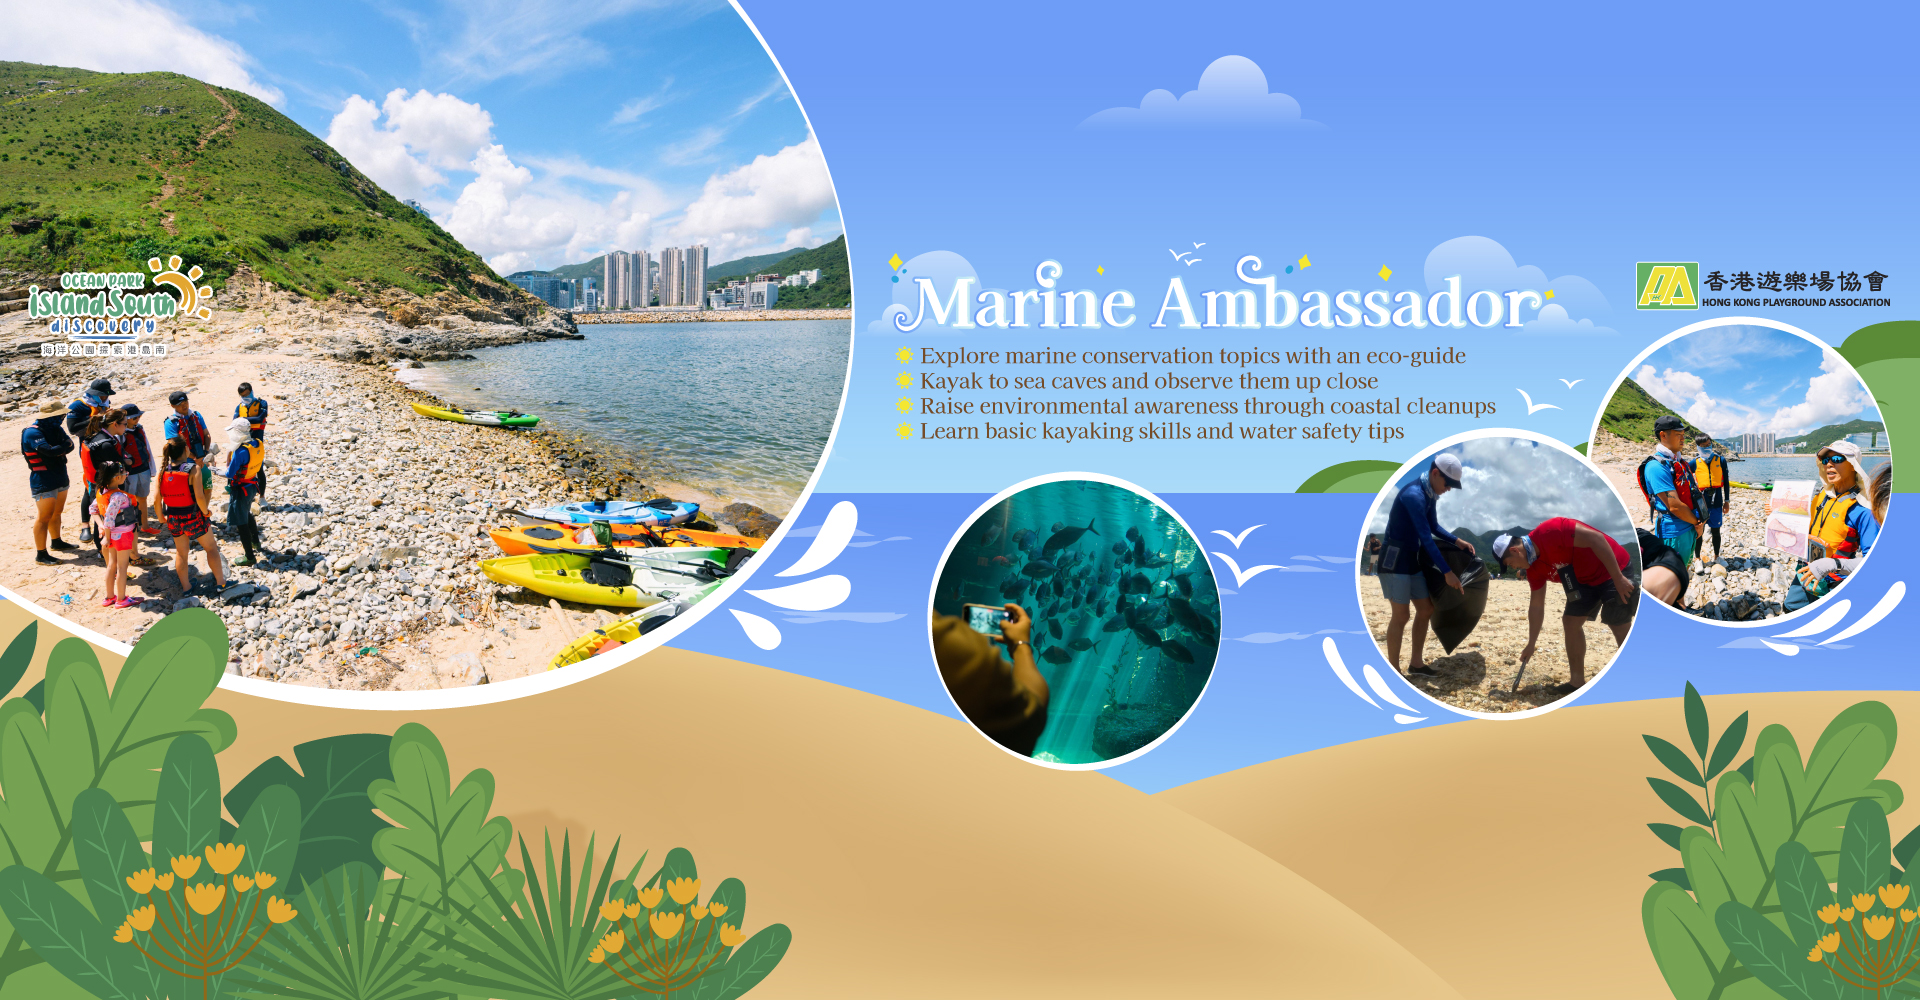 https://media.oceanpark.cn/files/s3fs-public/op-marine-ambassador-innerpage-banner-desktop-en.jpg